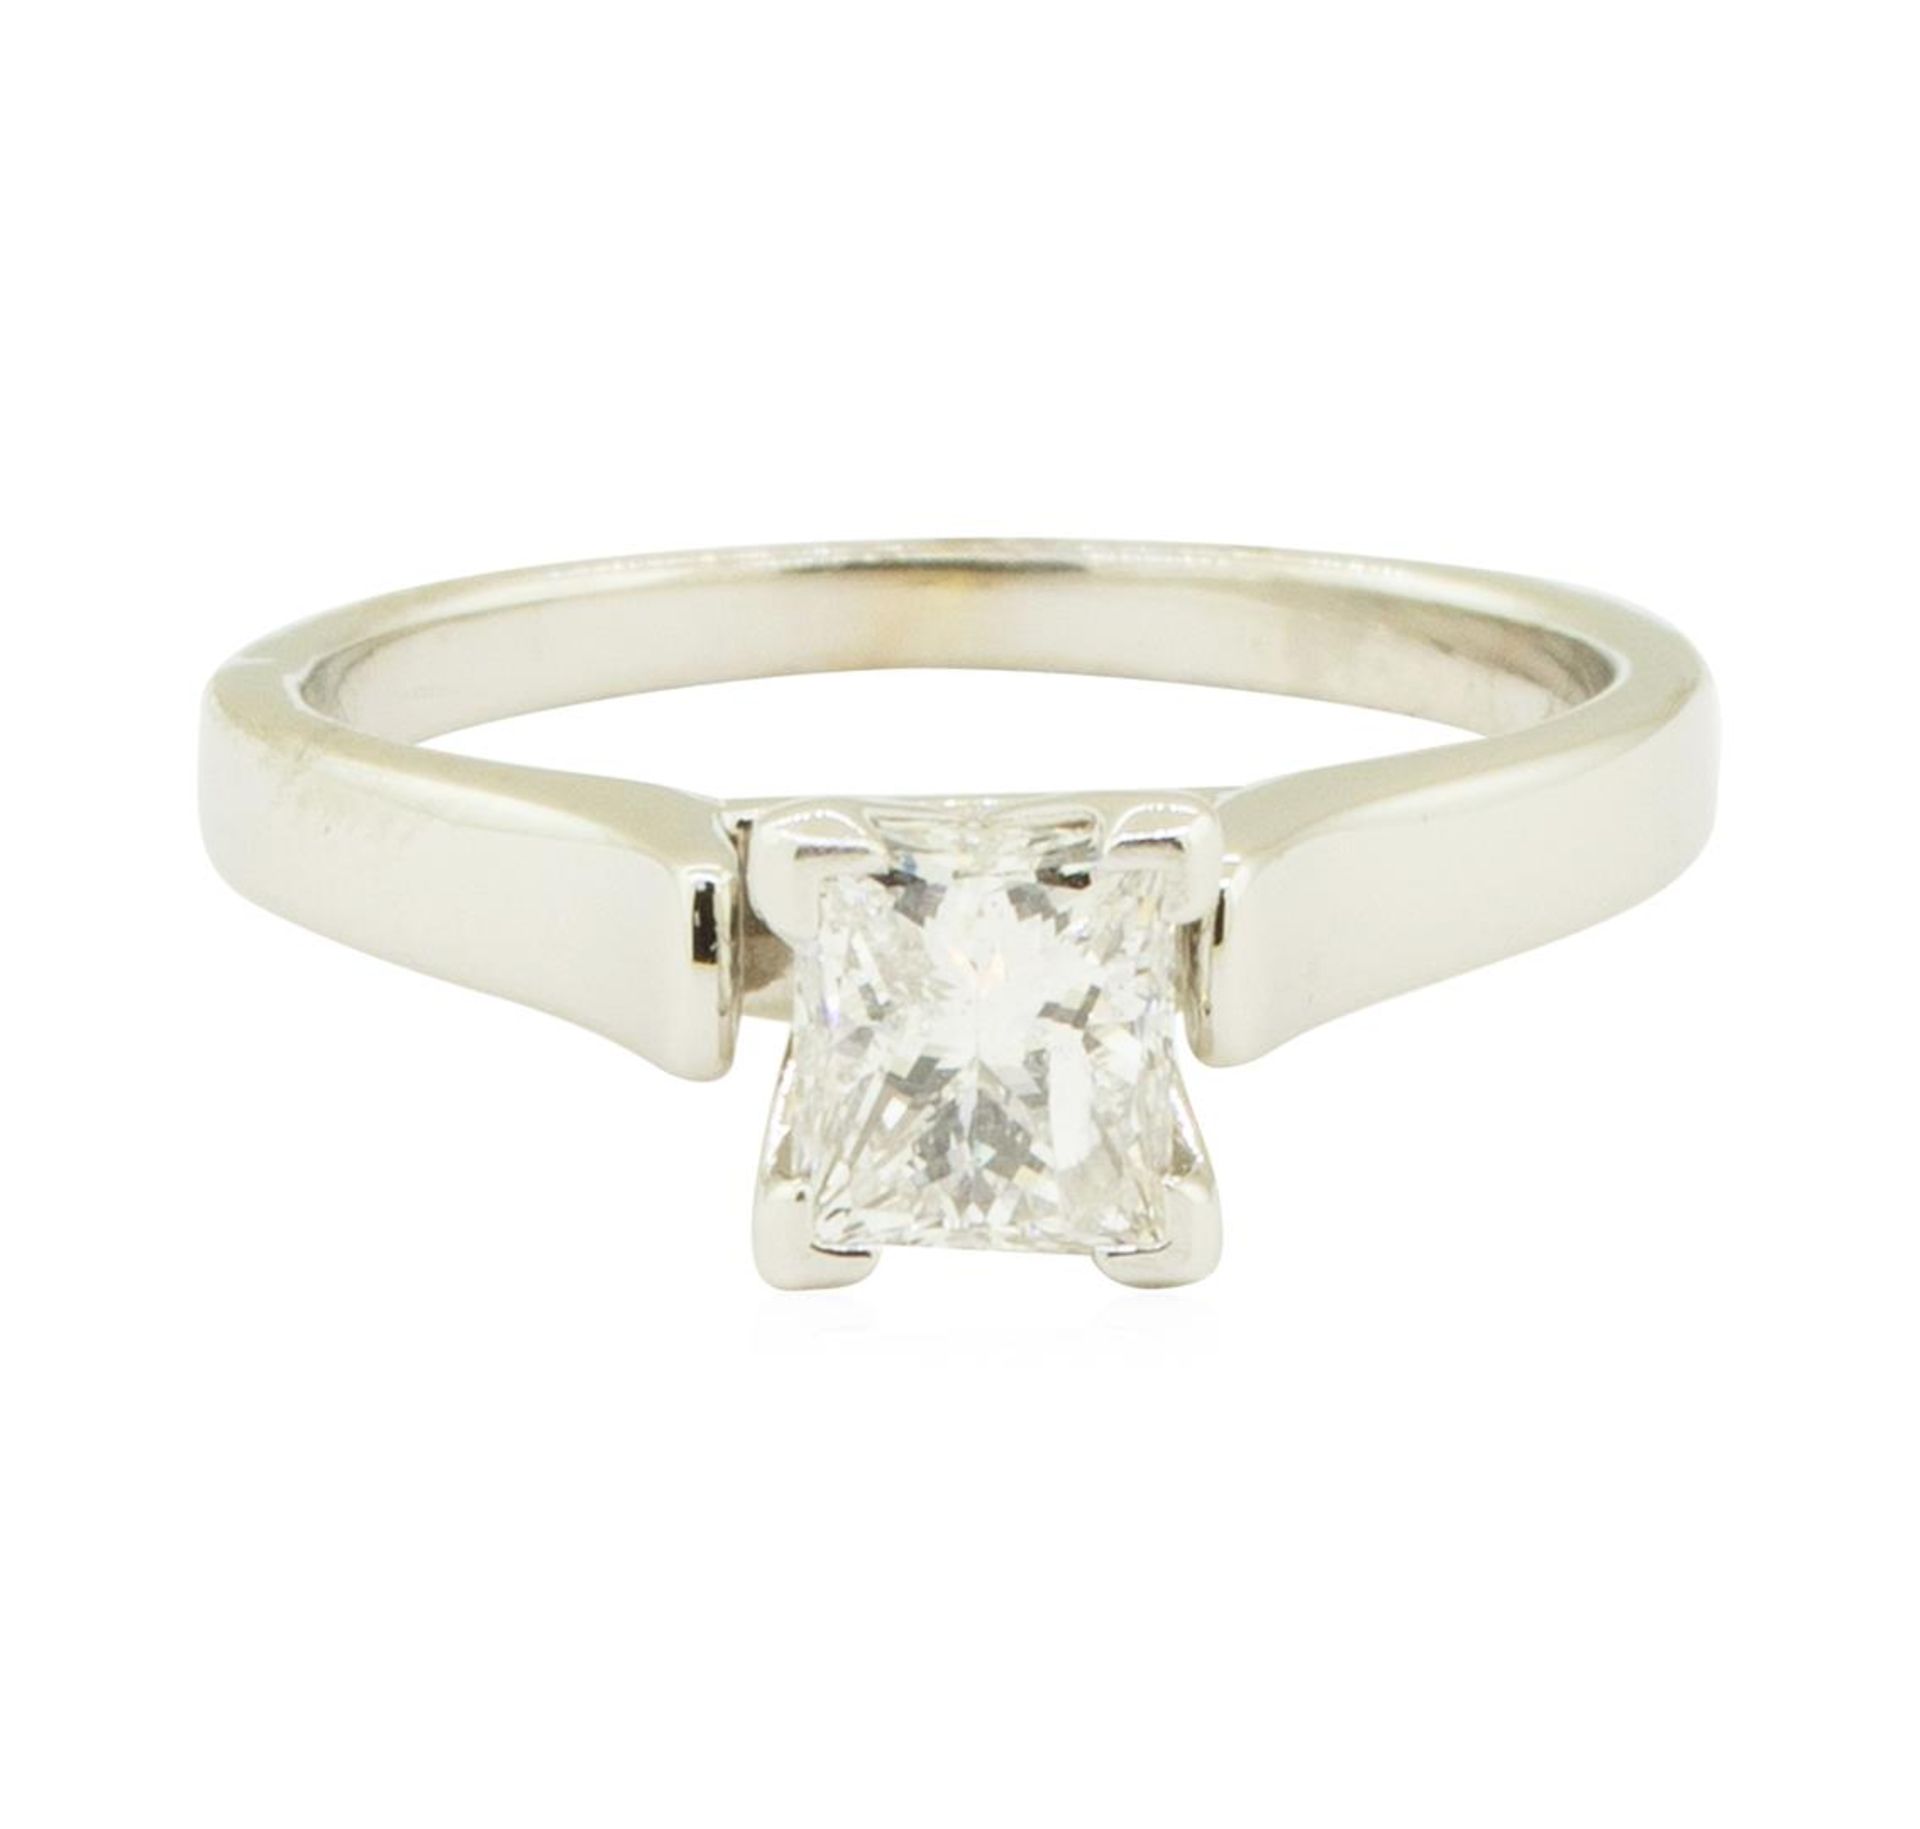 0.59 ctw Diamond Engagement Ring - 14KT White Gold - Image 2 of 5